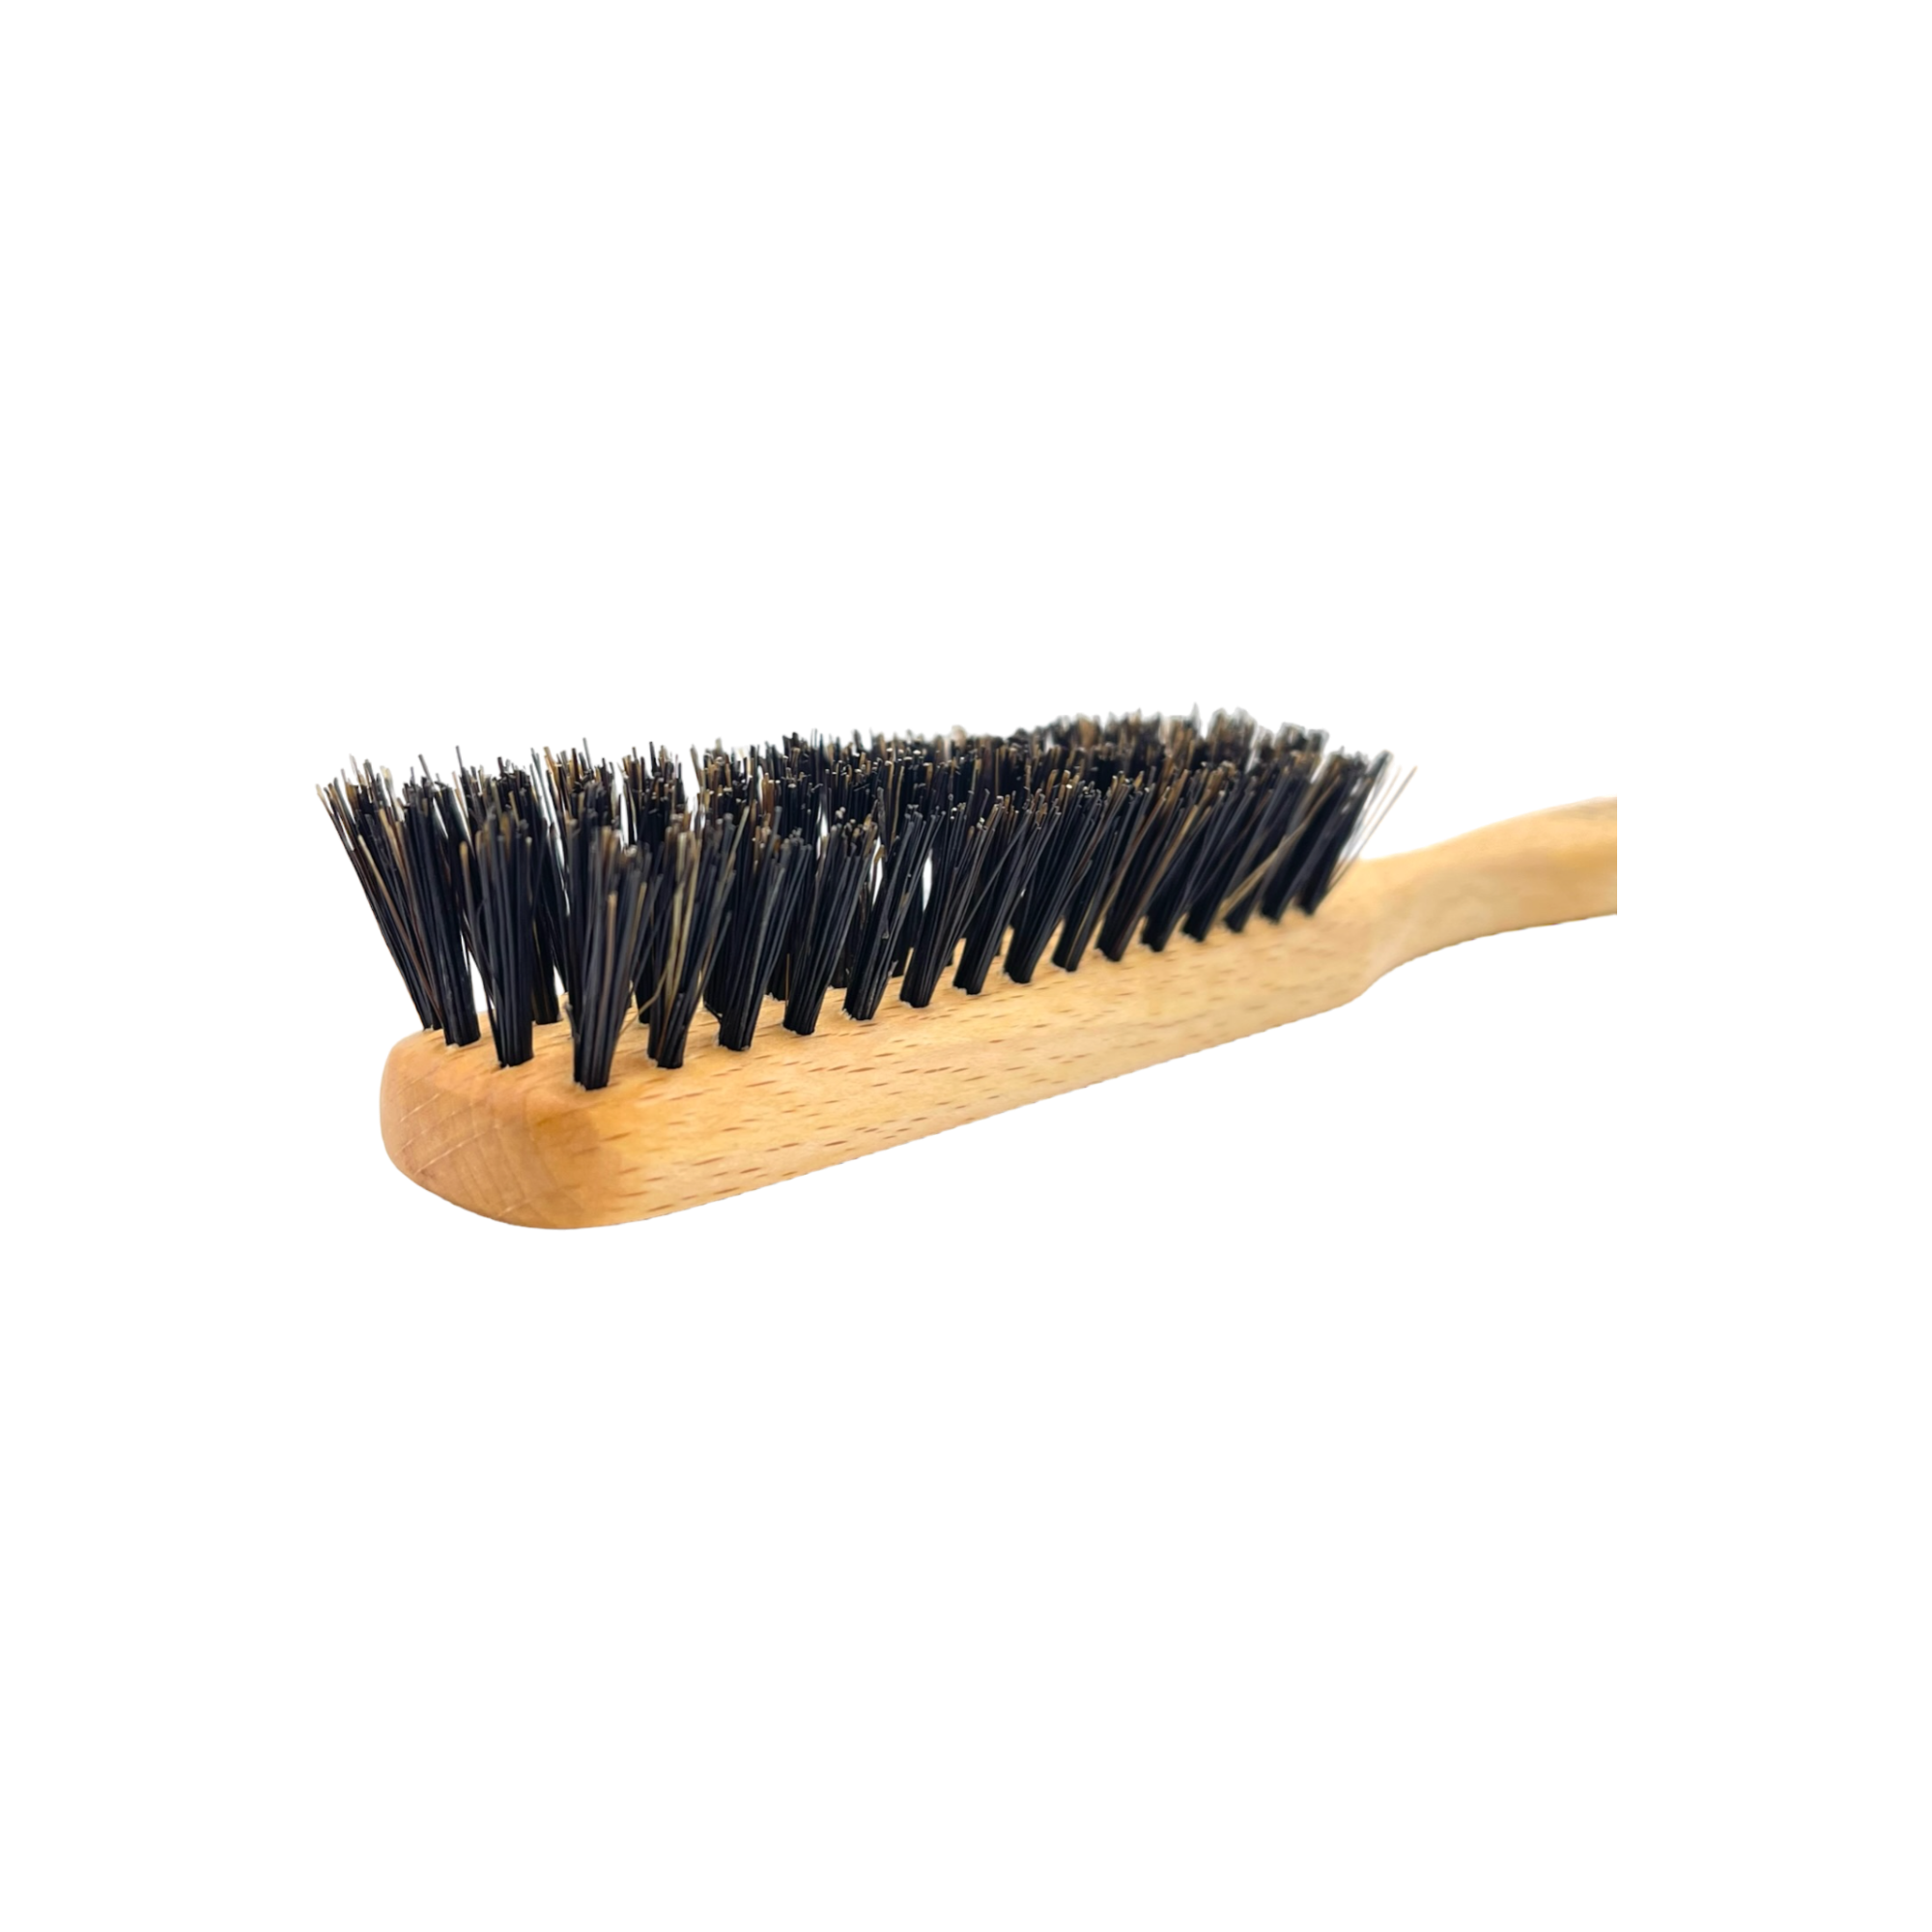 Dural Beech Wood boar bristles hair brush - 4 rows